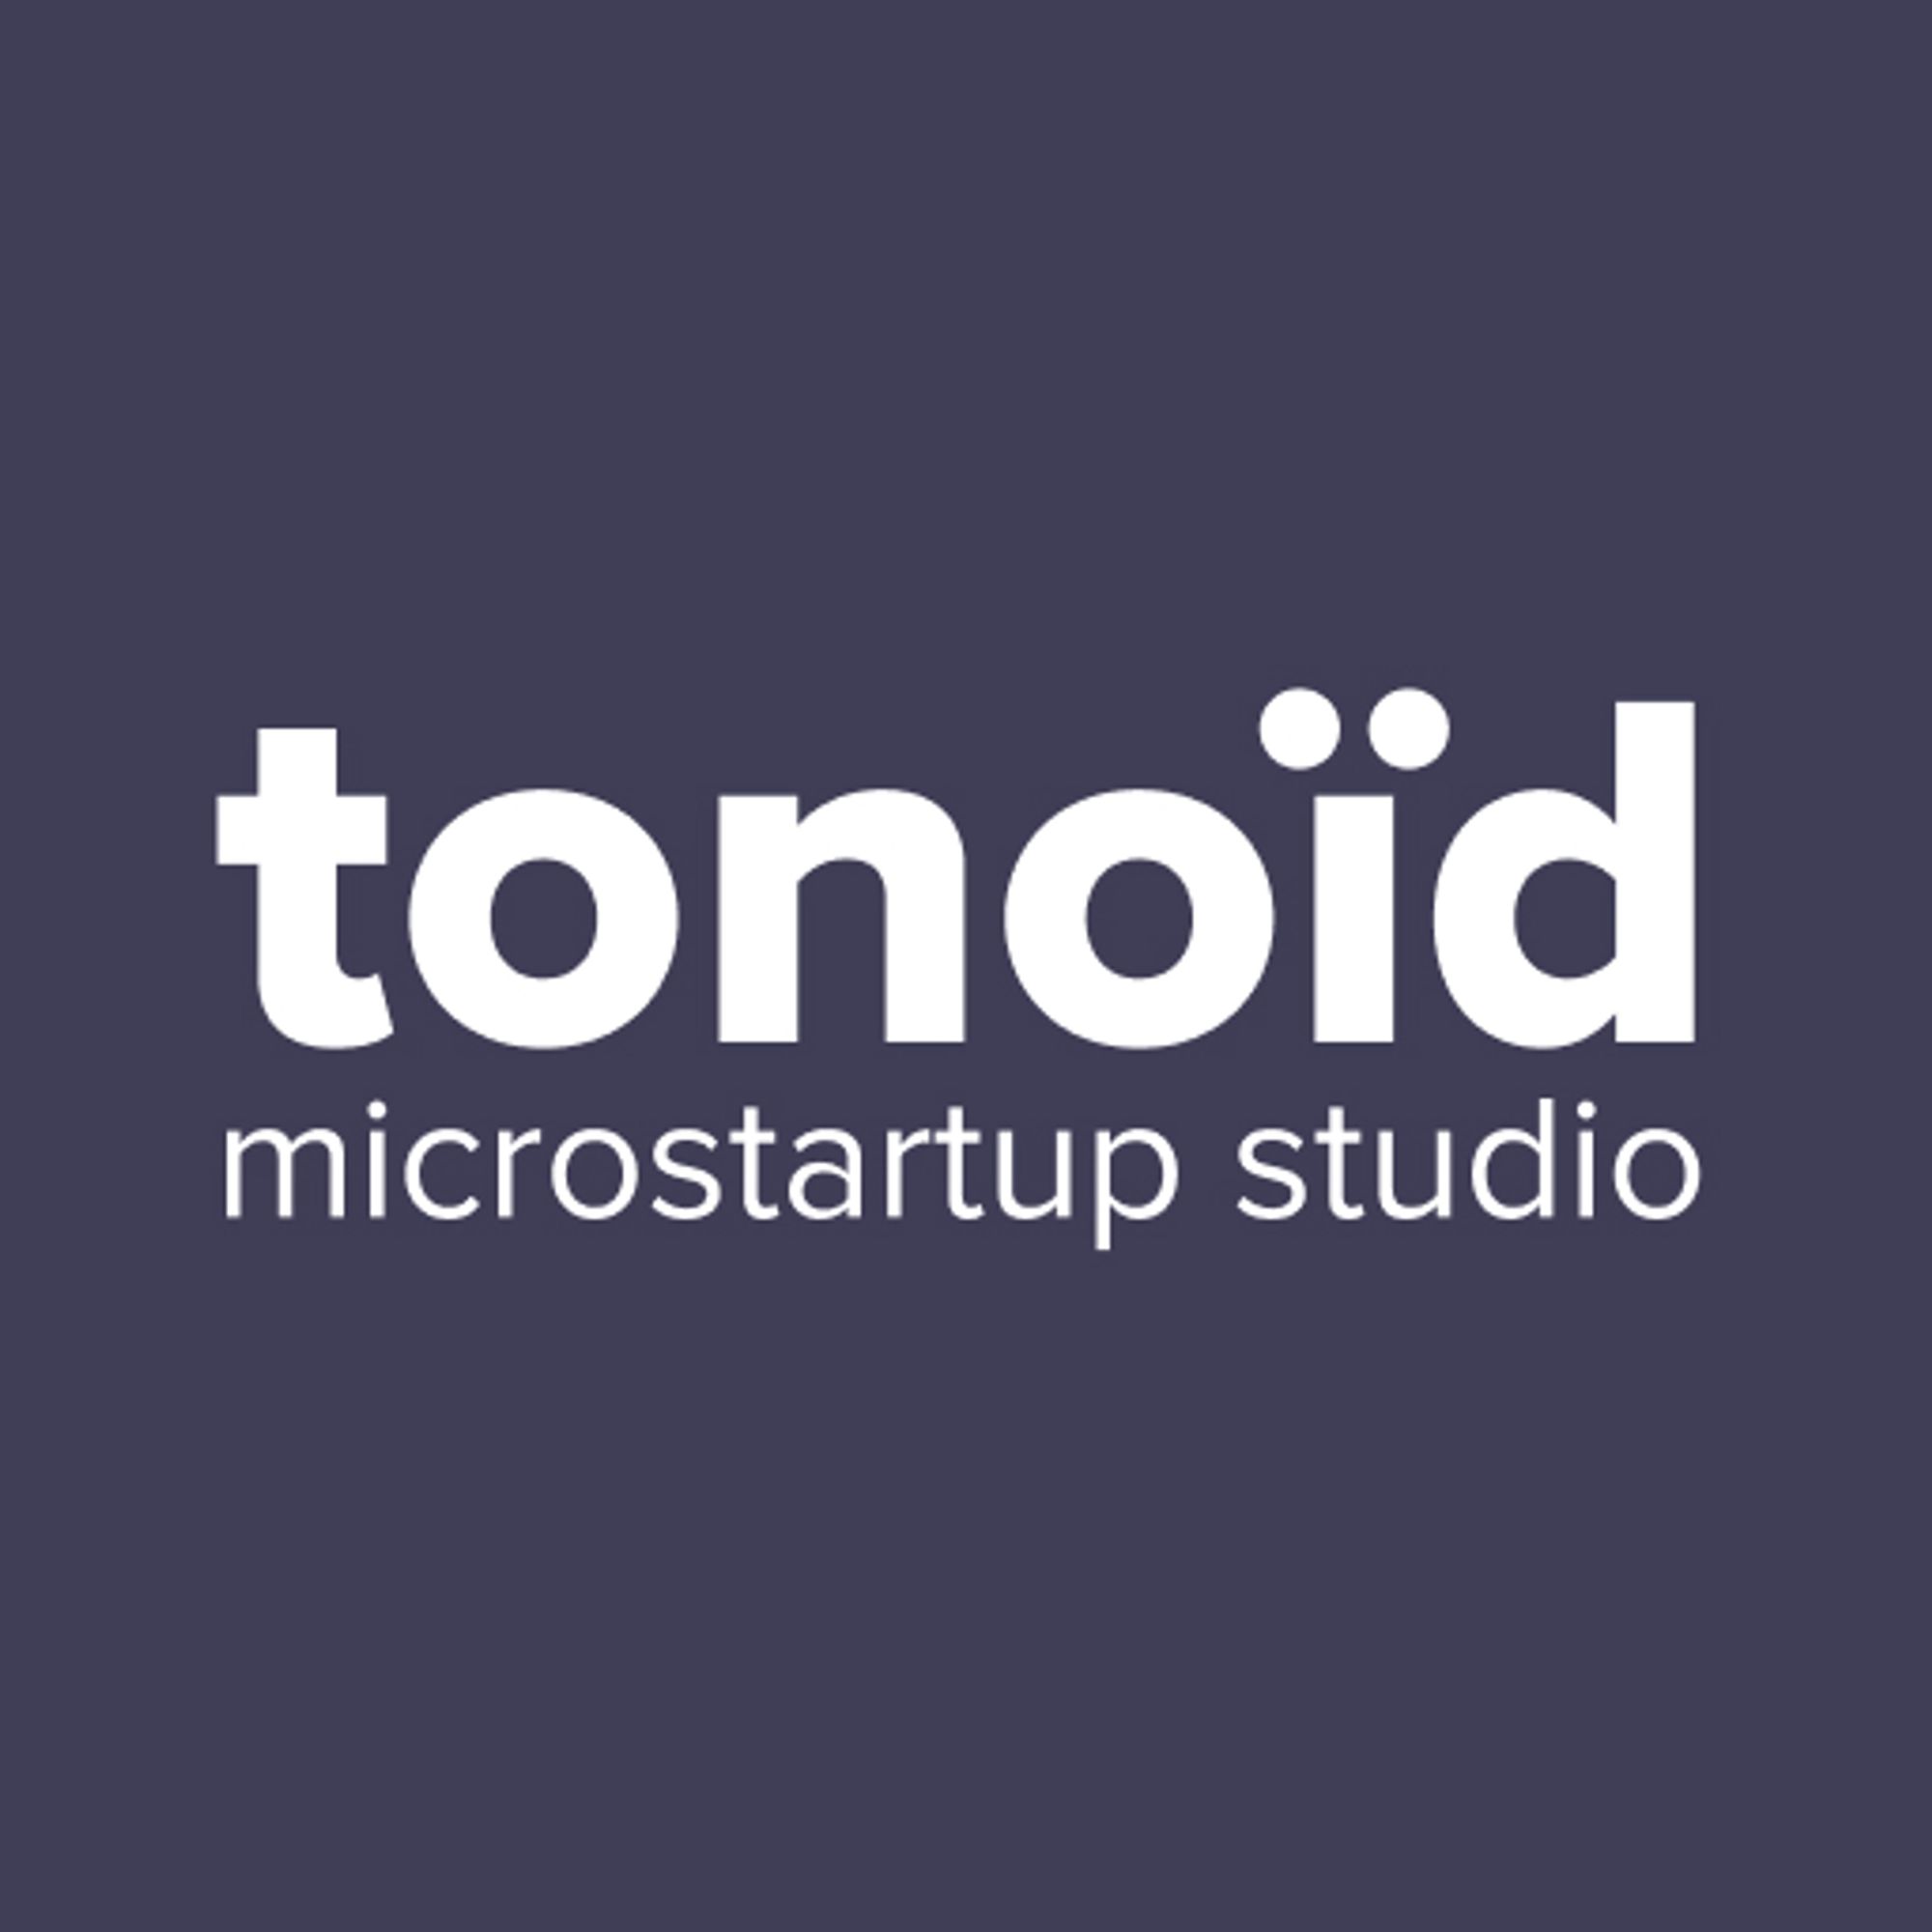 The Microstartup Studio